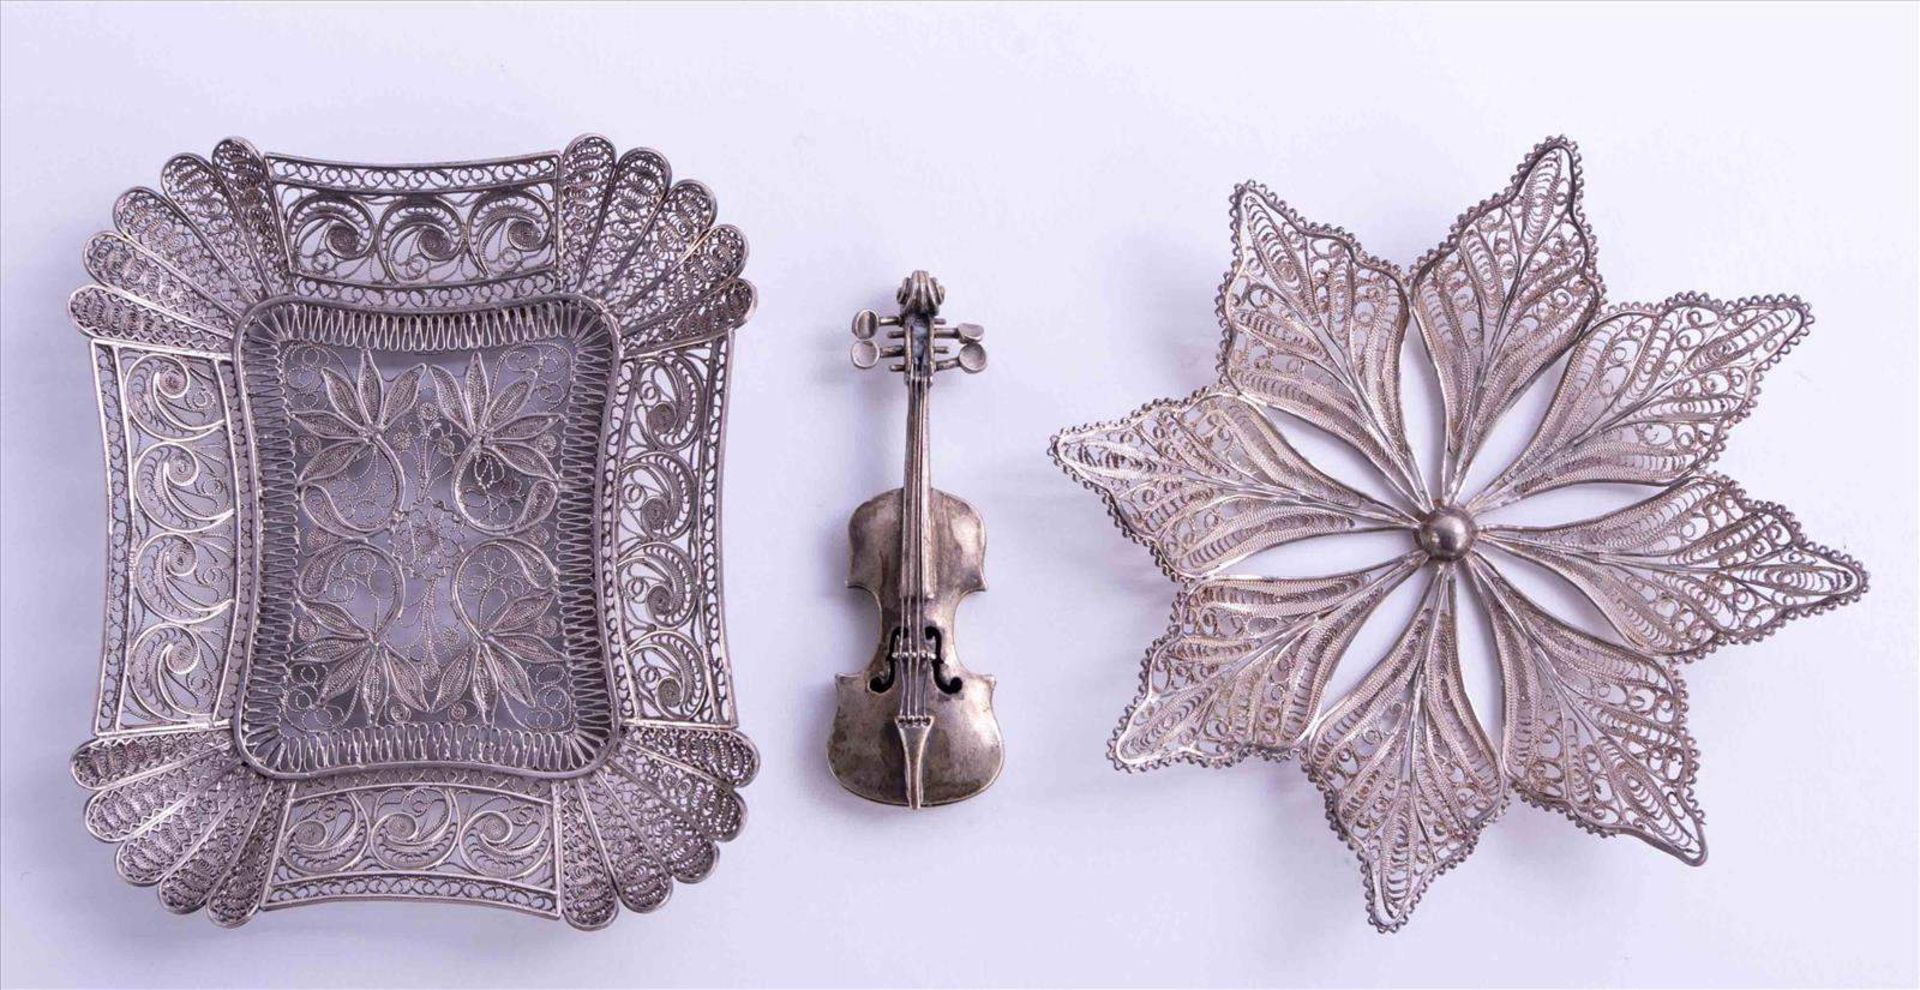 Konvolut Silber / Group of silver items 3 Teile, 1 kleine Geige 800/000 Silber, L: 6,5 cm, 1